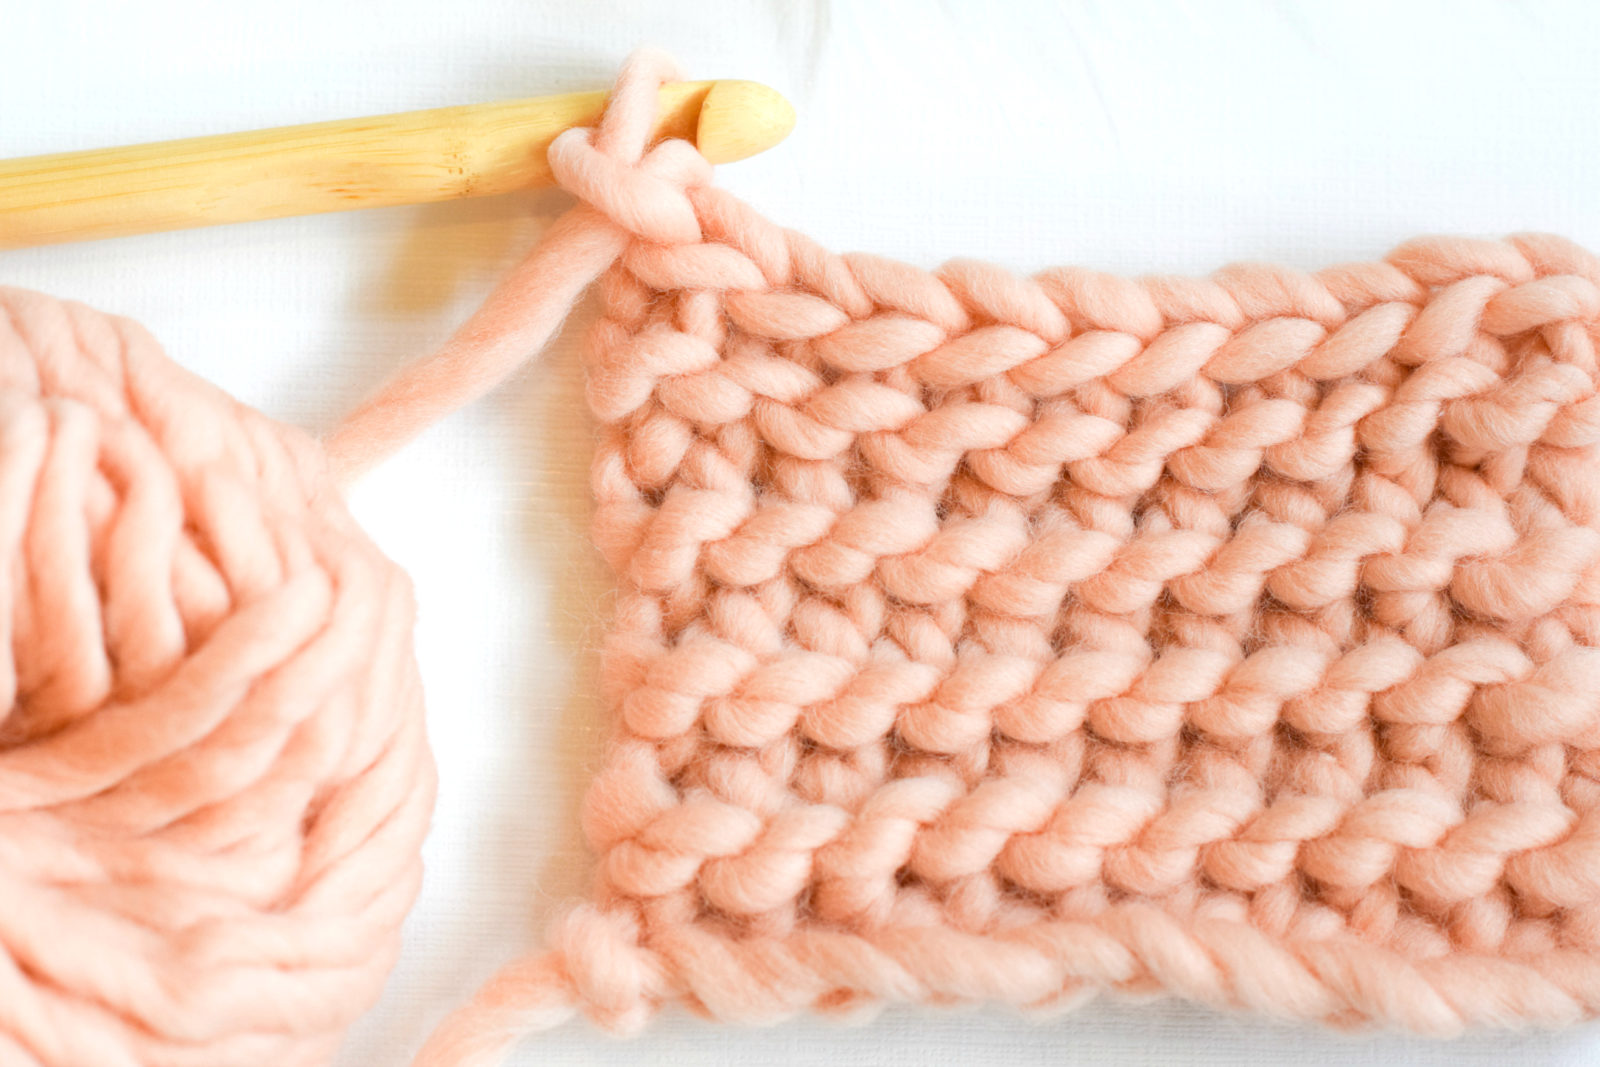 Crochet Stitch That Looks Like Knitting Tutorial